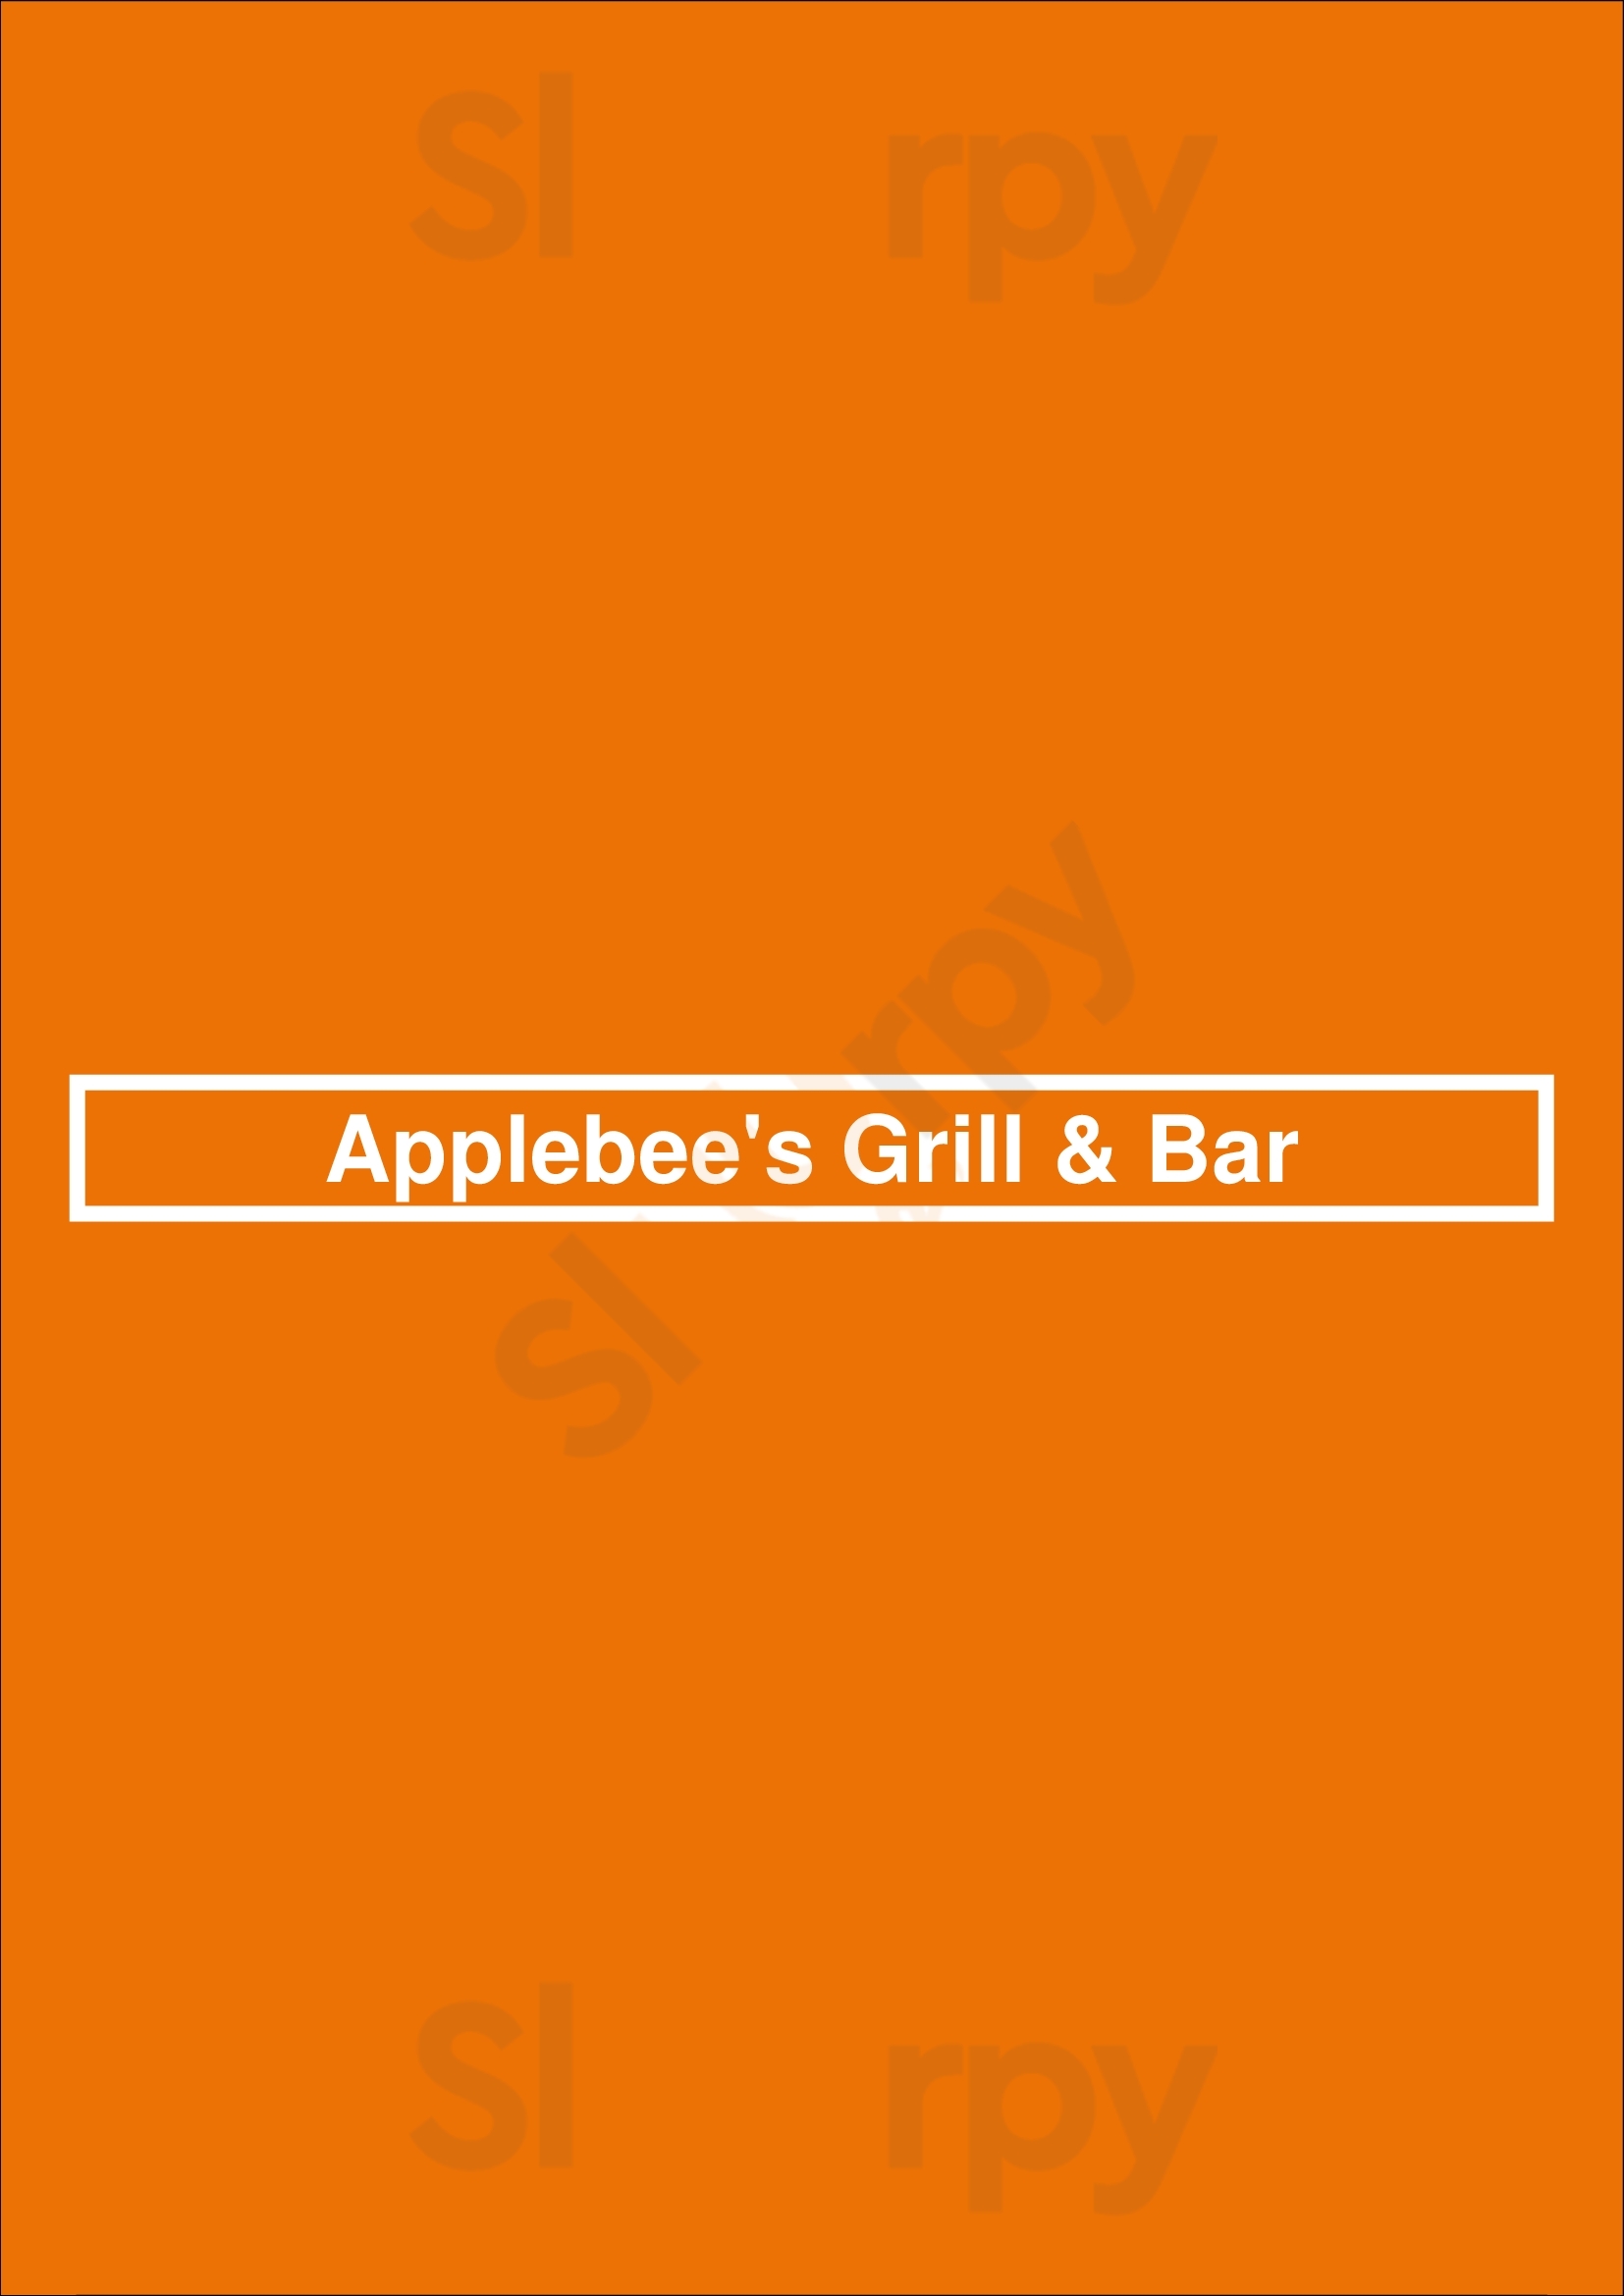 Applebee's Grill & Bar Rochester Menu - 1